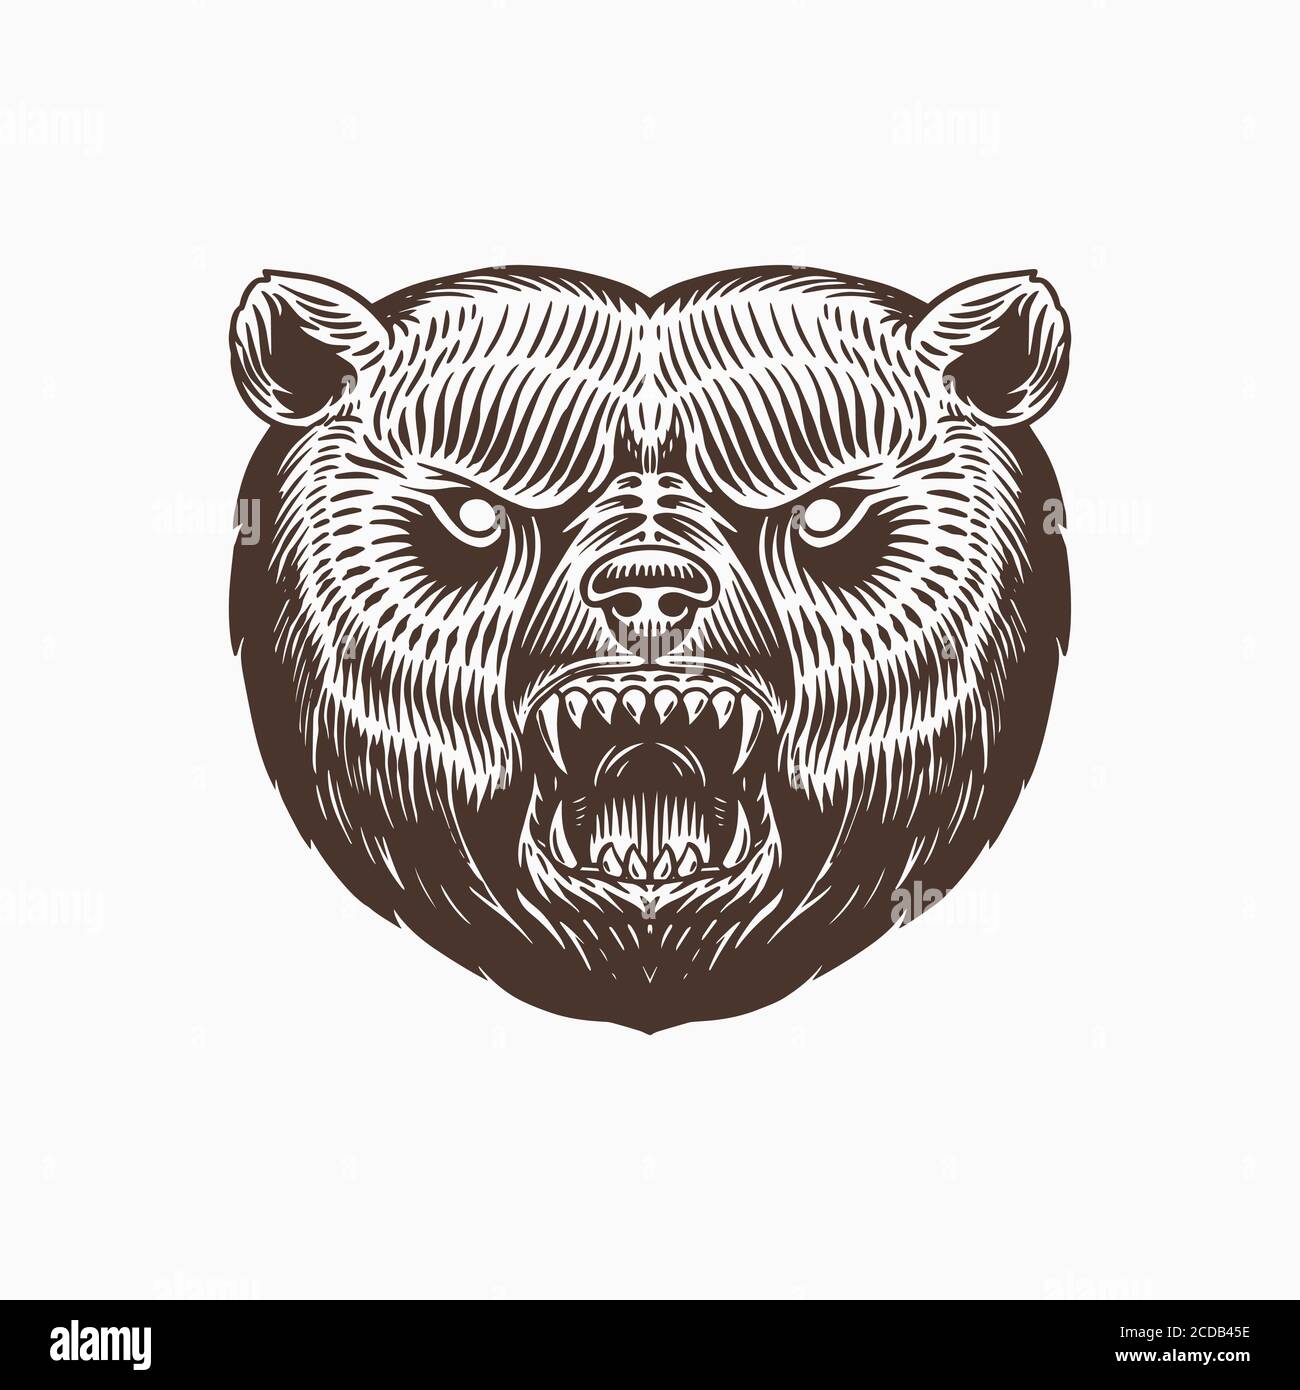 Geometric Sketch Style Bear Head Tattoo Idea